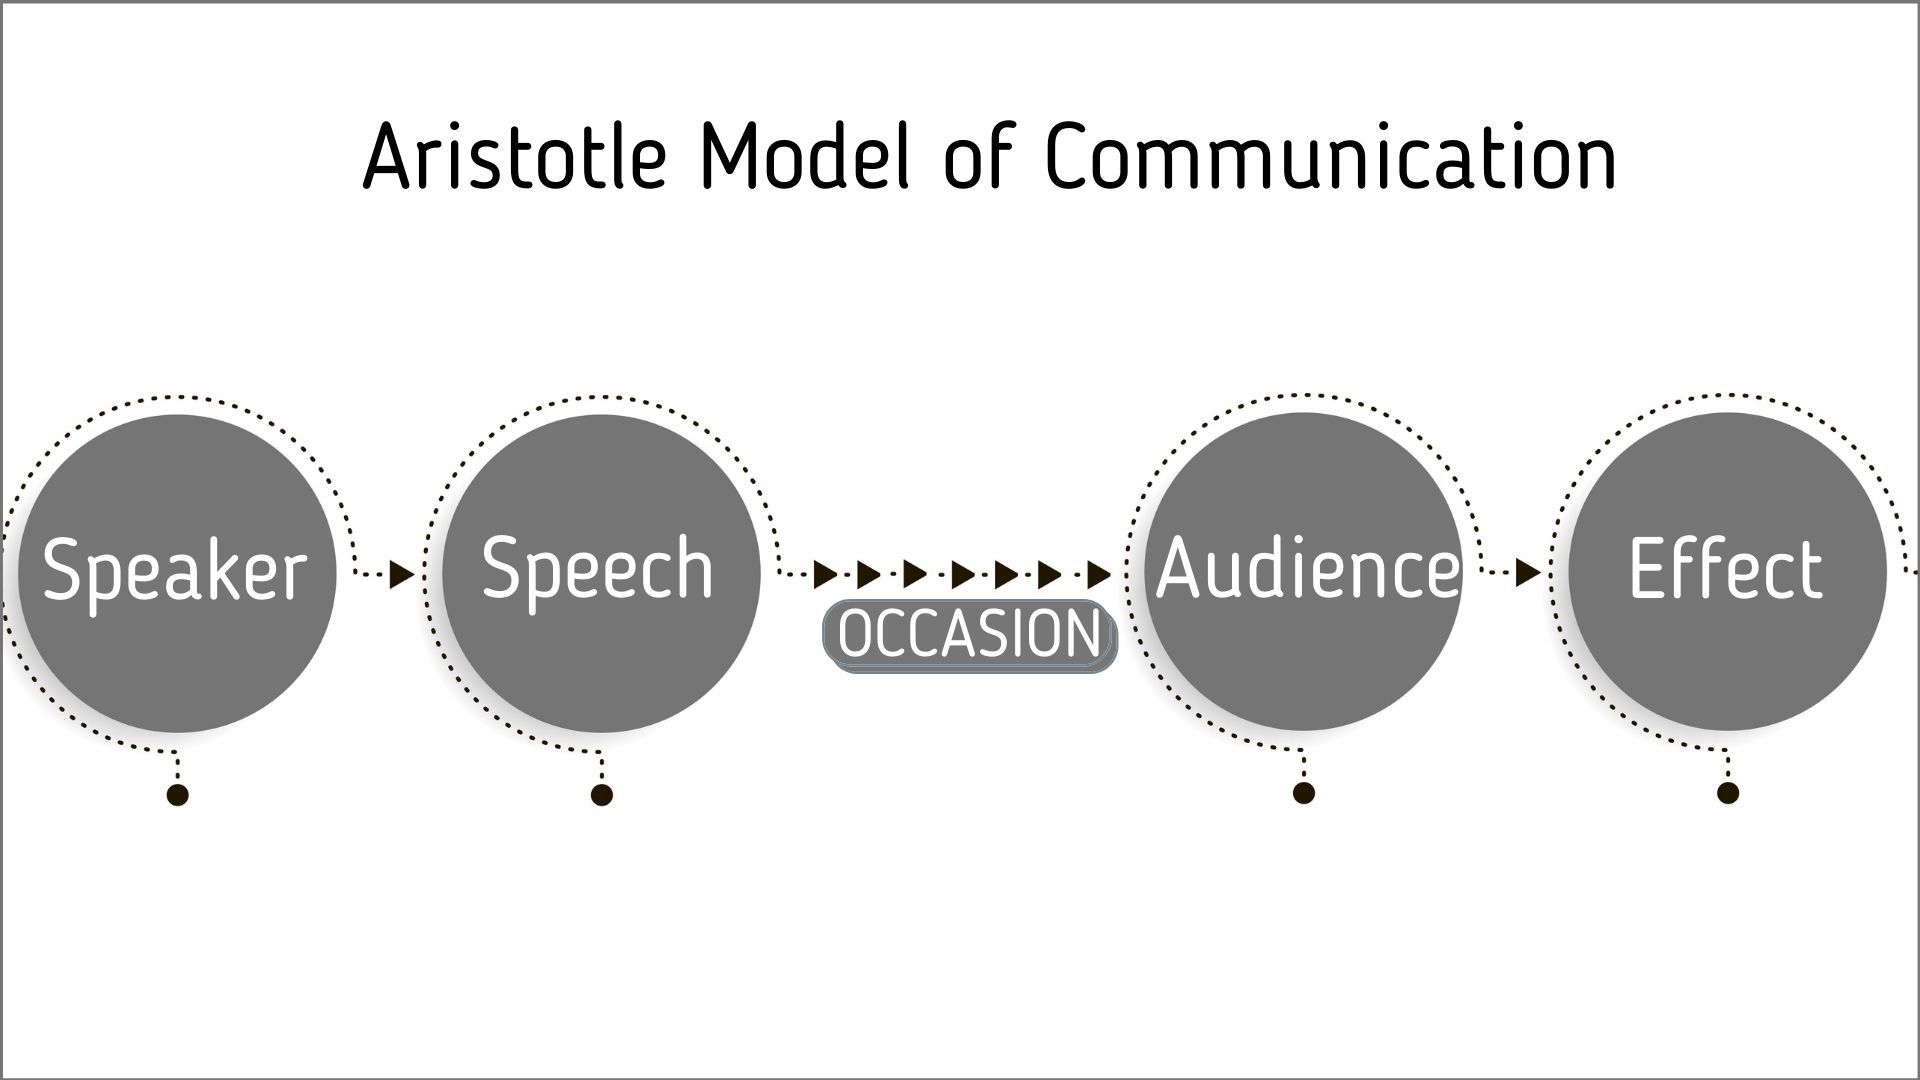 Aristotle's model of communication